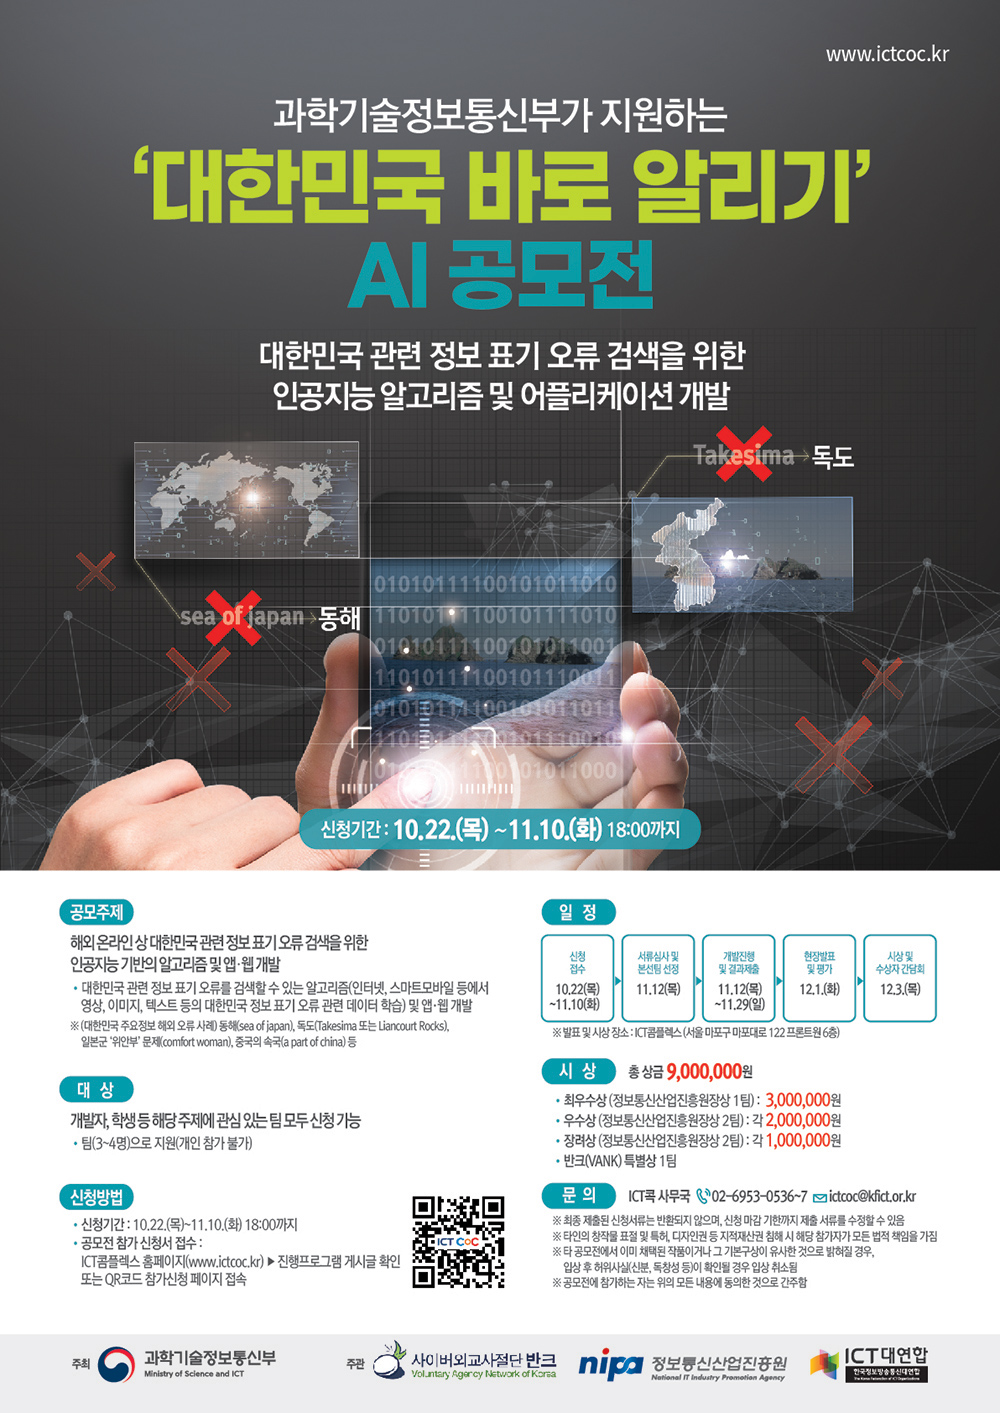  2020-ICT콕-대한민국바로알리기-AI공모전-포스터1.jpg